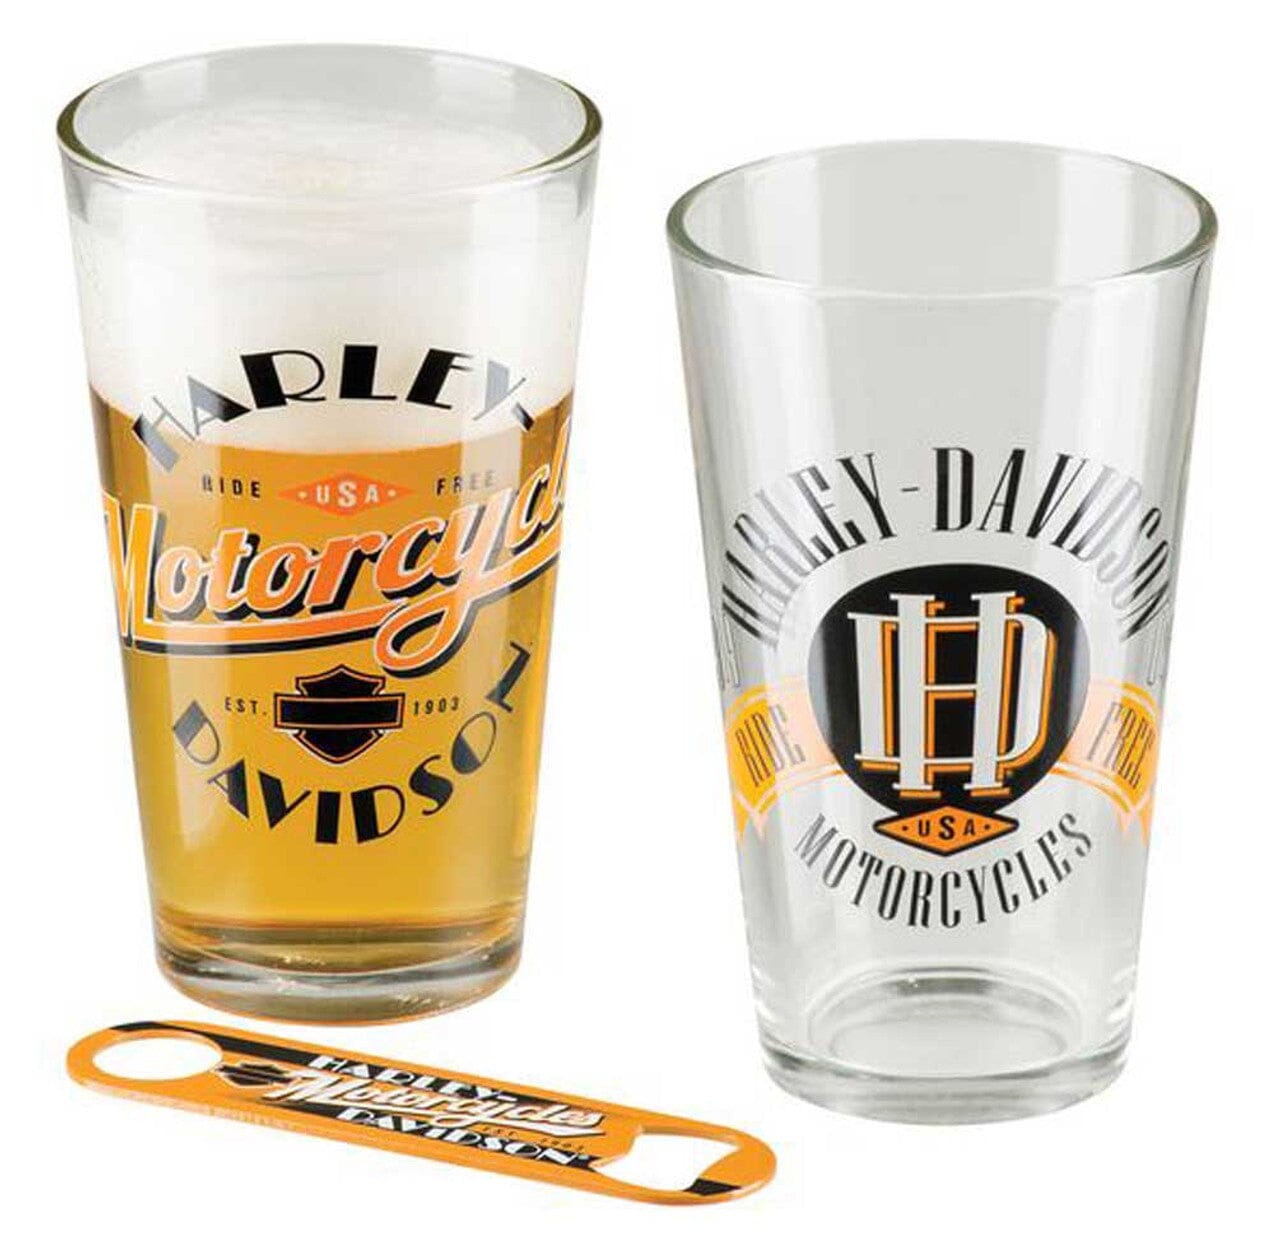 Harley-Davidson Ride Free Pint Glass Set with Bottle Opener - HDL-18798